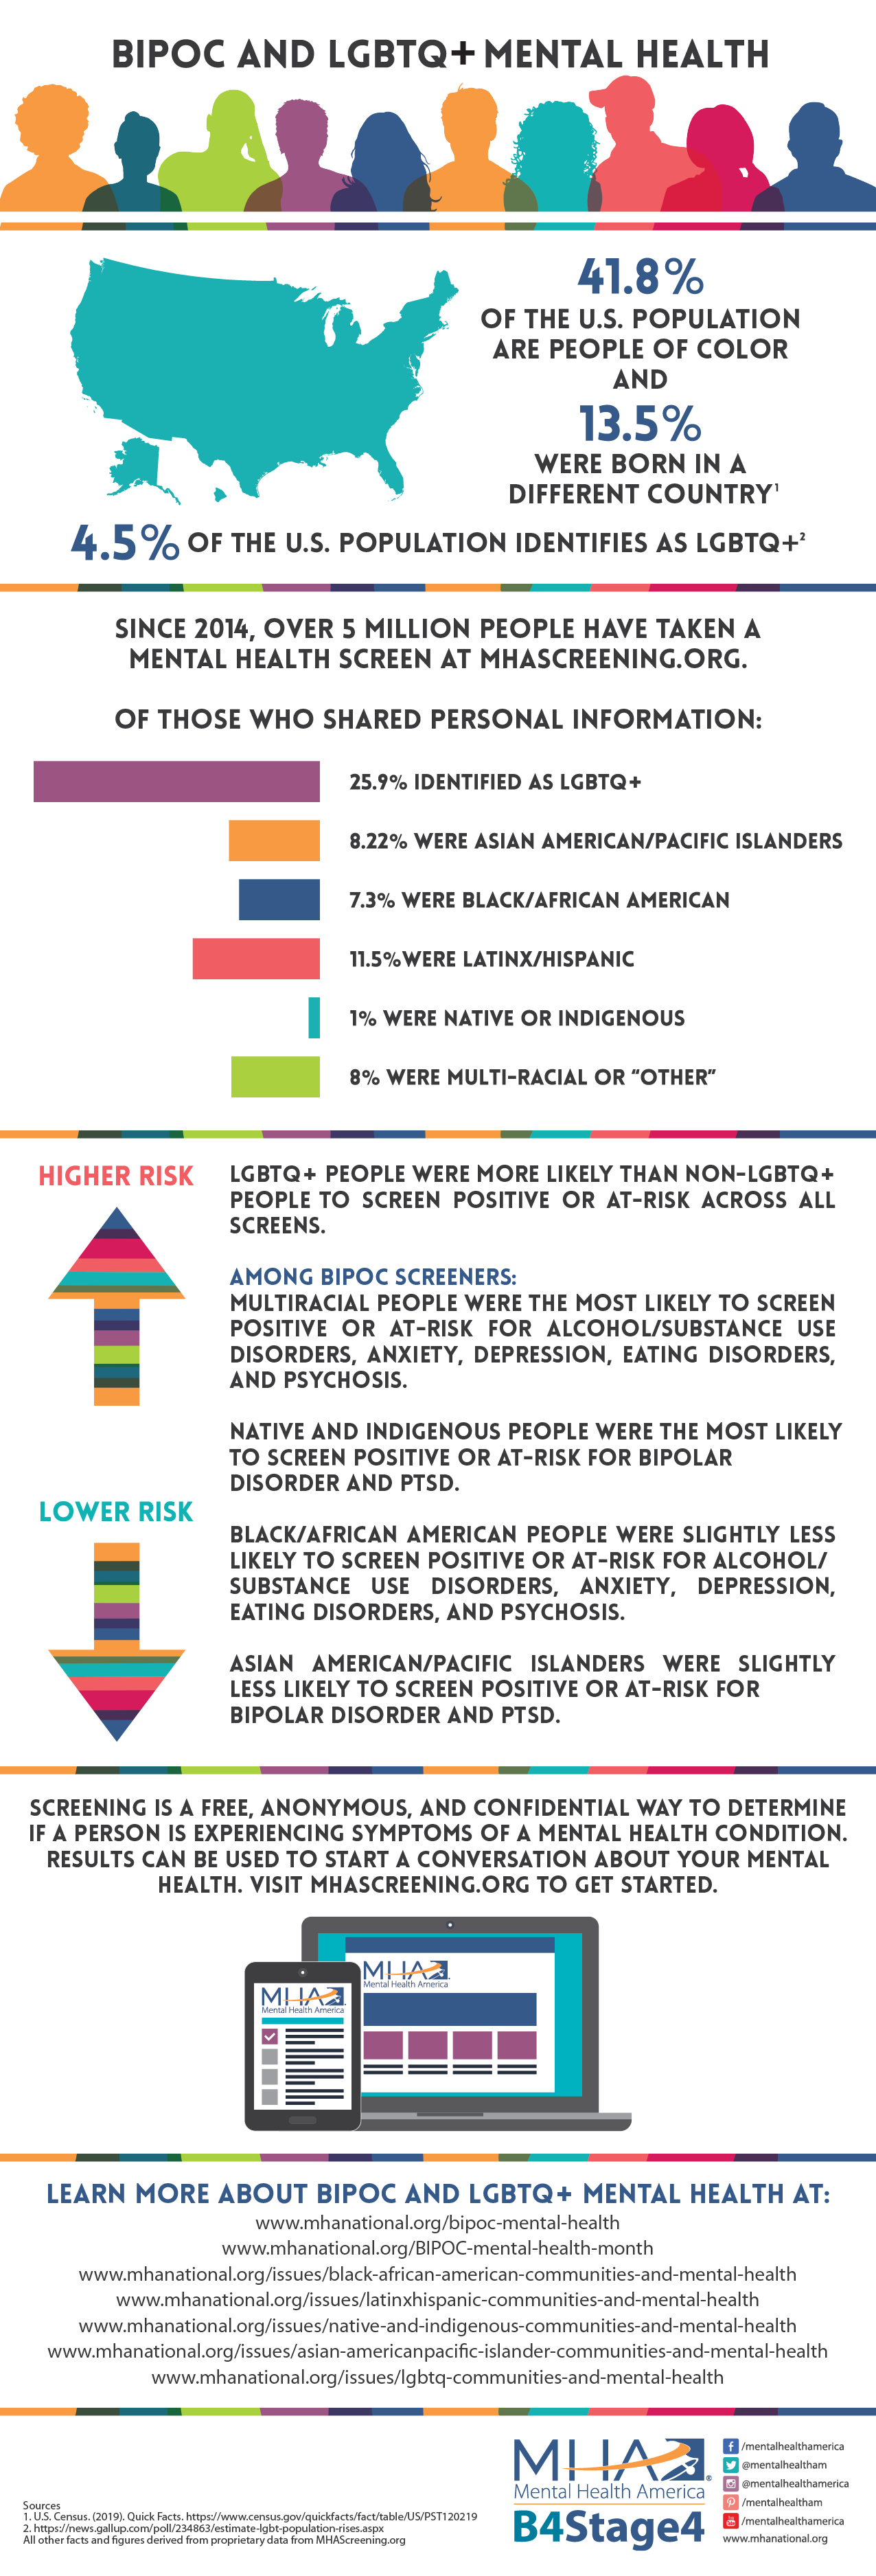 BIPOC Mental Health Infographic MHA Mental Health America